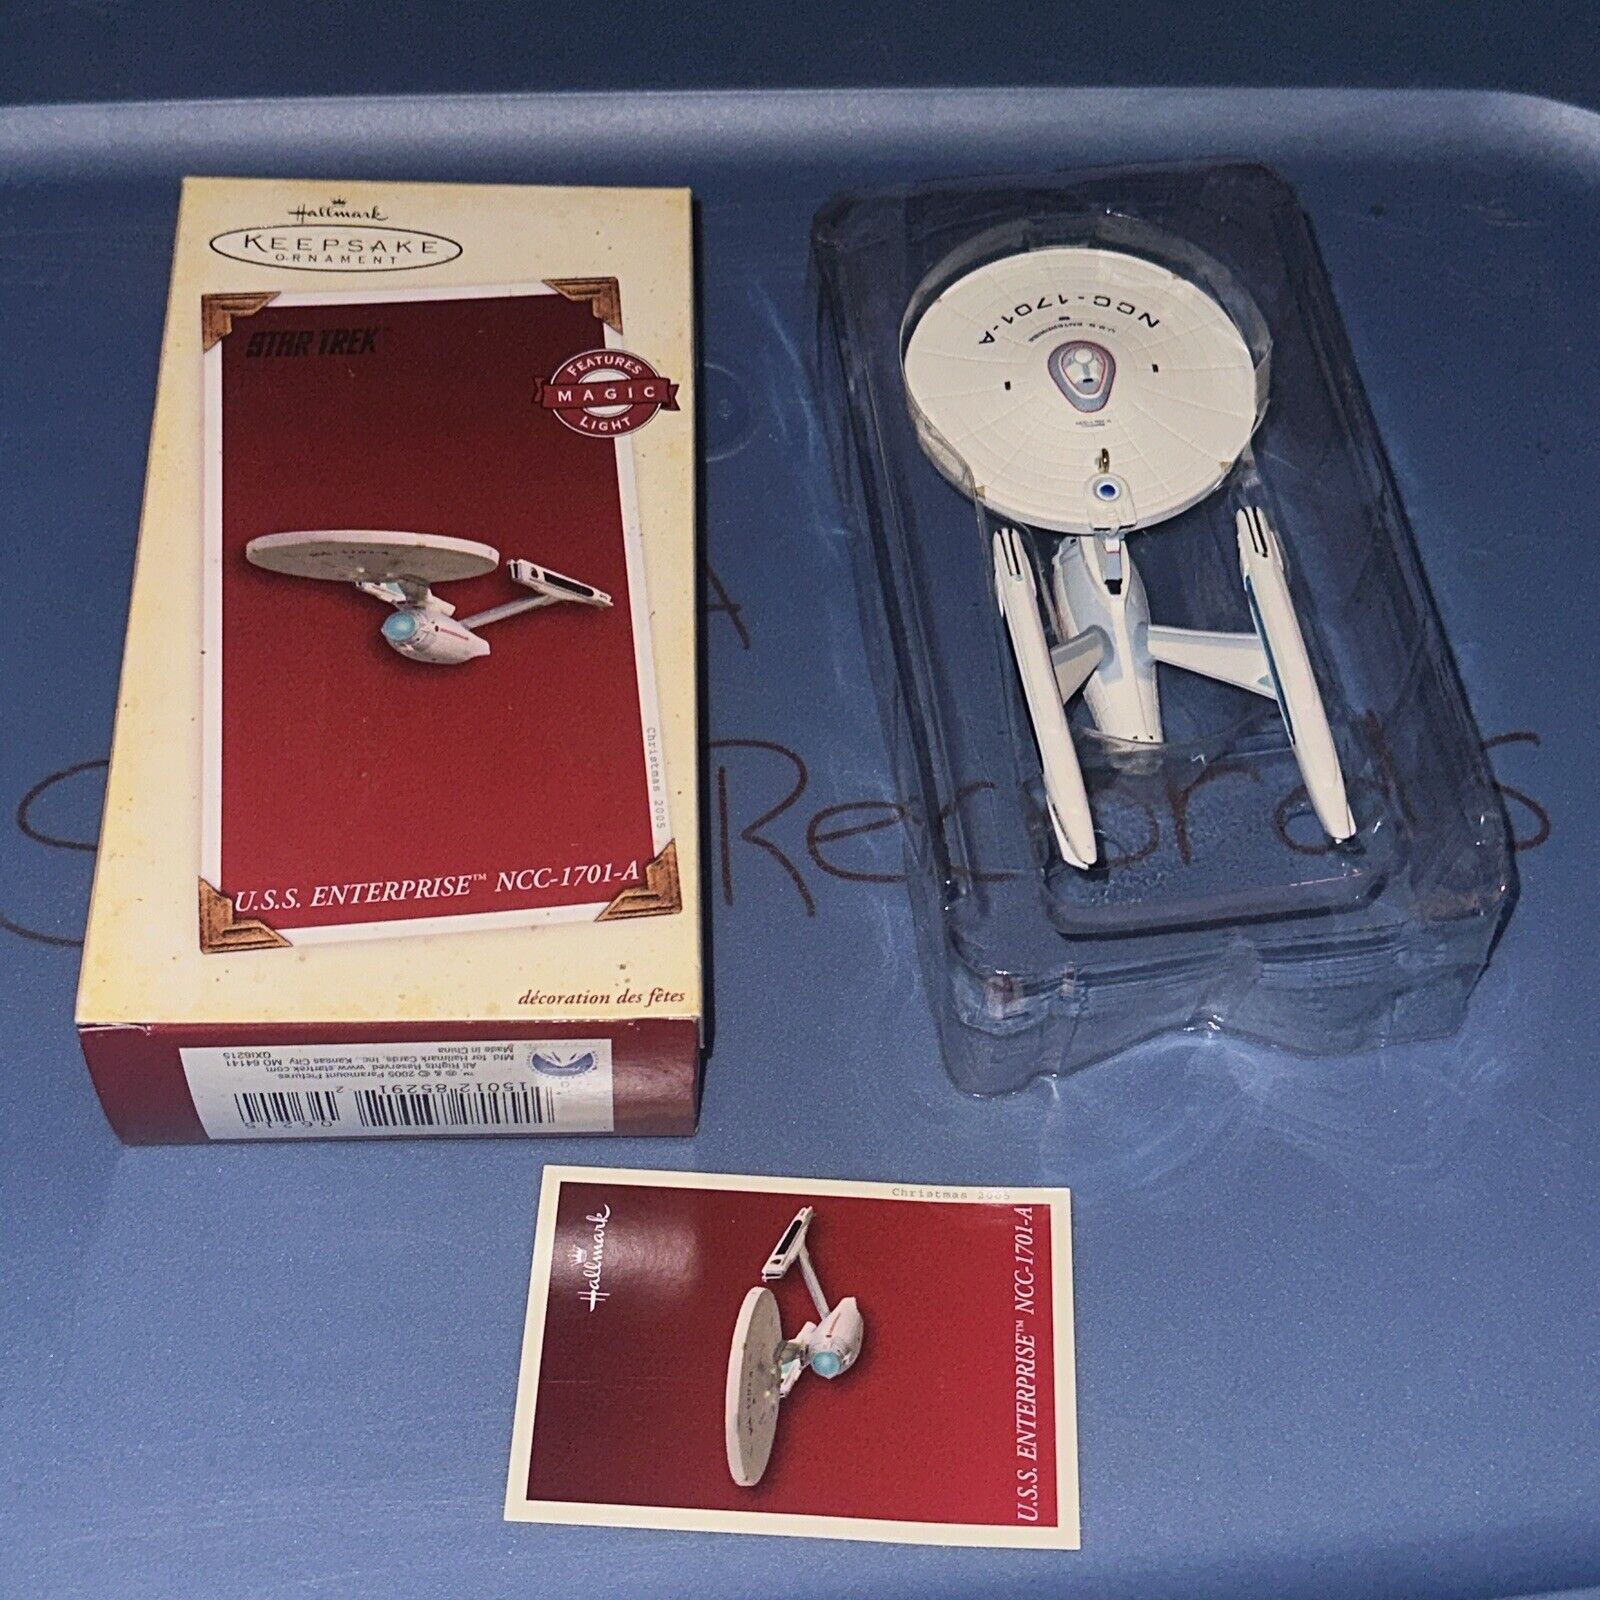 Star Trek 2005 USS Enterprise NCC-1701-A Hallmark Ornament